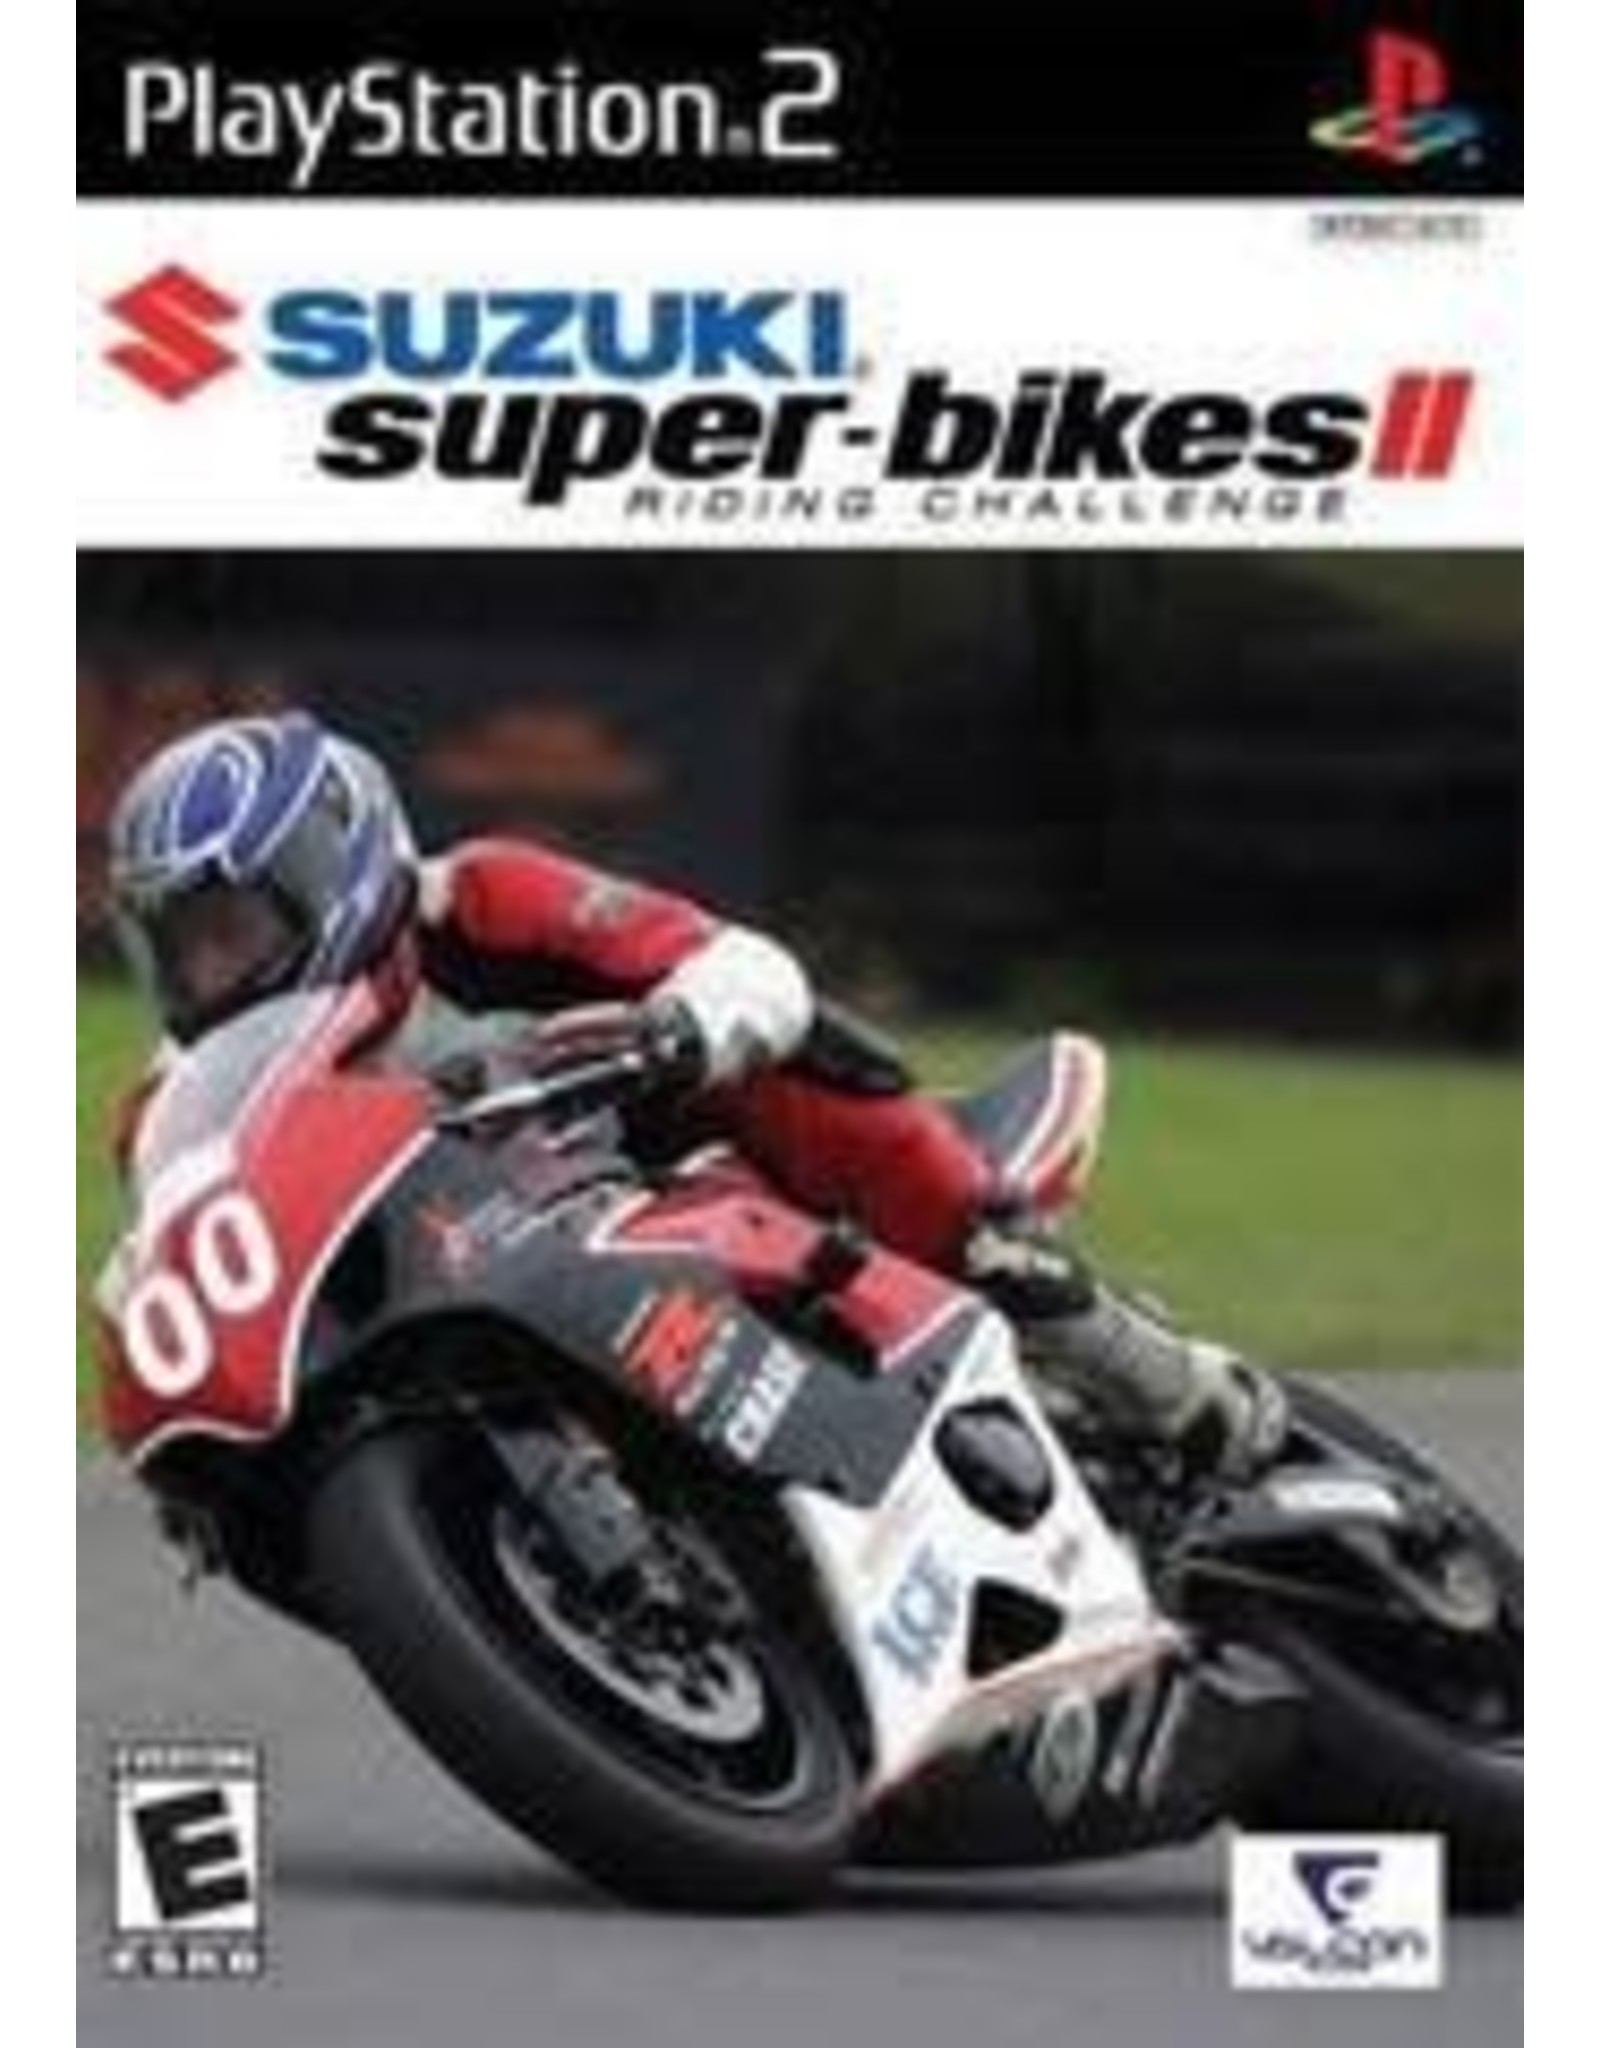 Playstation 2 Suzuki Super-Bikes II Riding Challenge (No Manual)